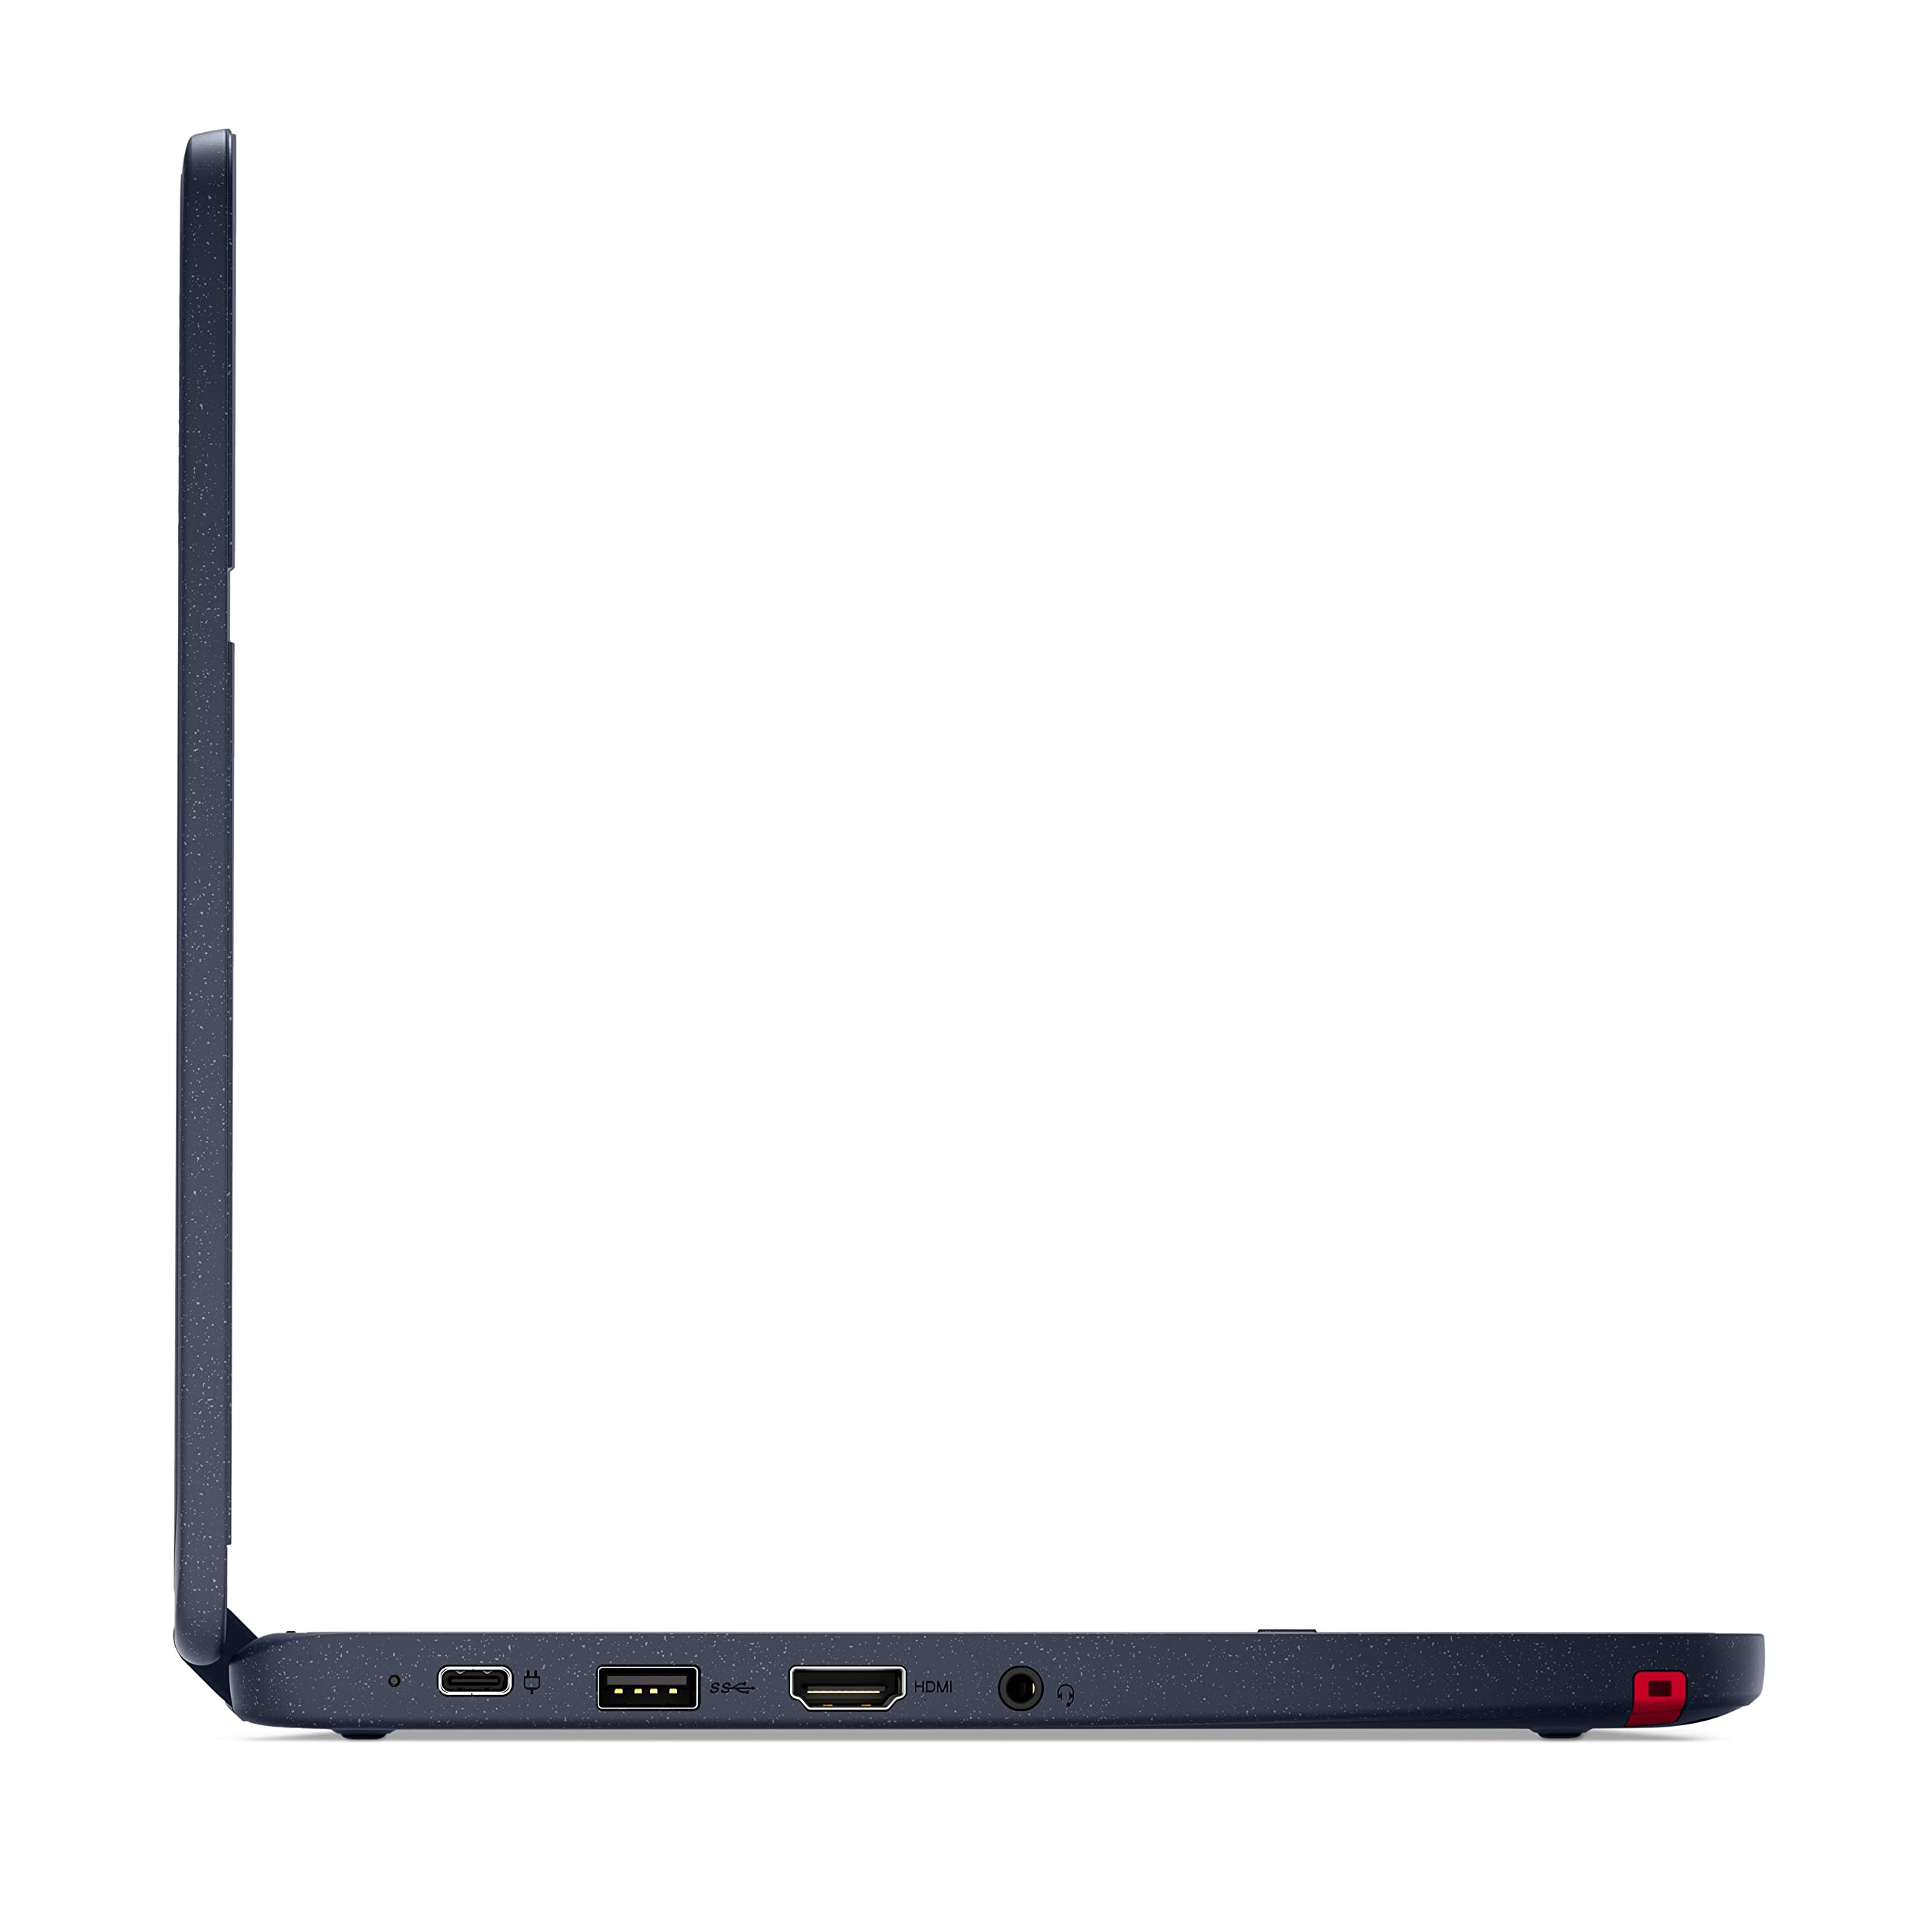 Lenovo - 300W Gen 3-2-in-1 Educational Computer - Laptop for Students - AMD 3015e Dual-Core Processor - 11.6